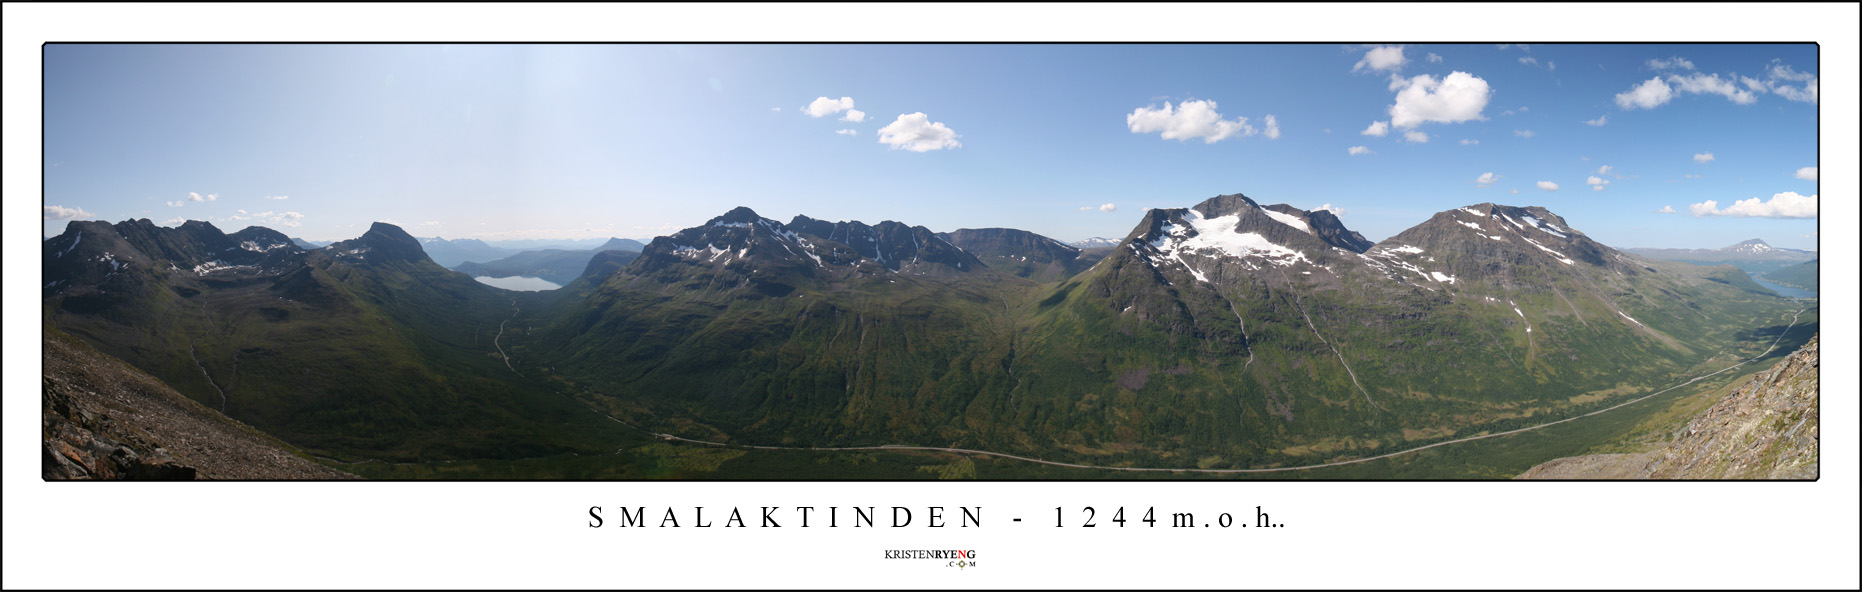 Panorama-Smalaktinden2.jpg - Utsikt fra Smalaktinden - 1244 moh